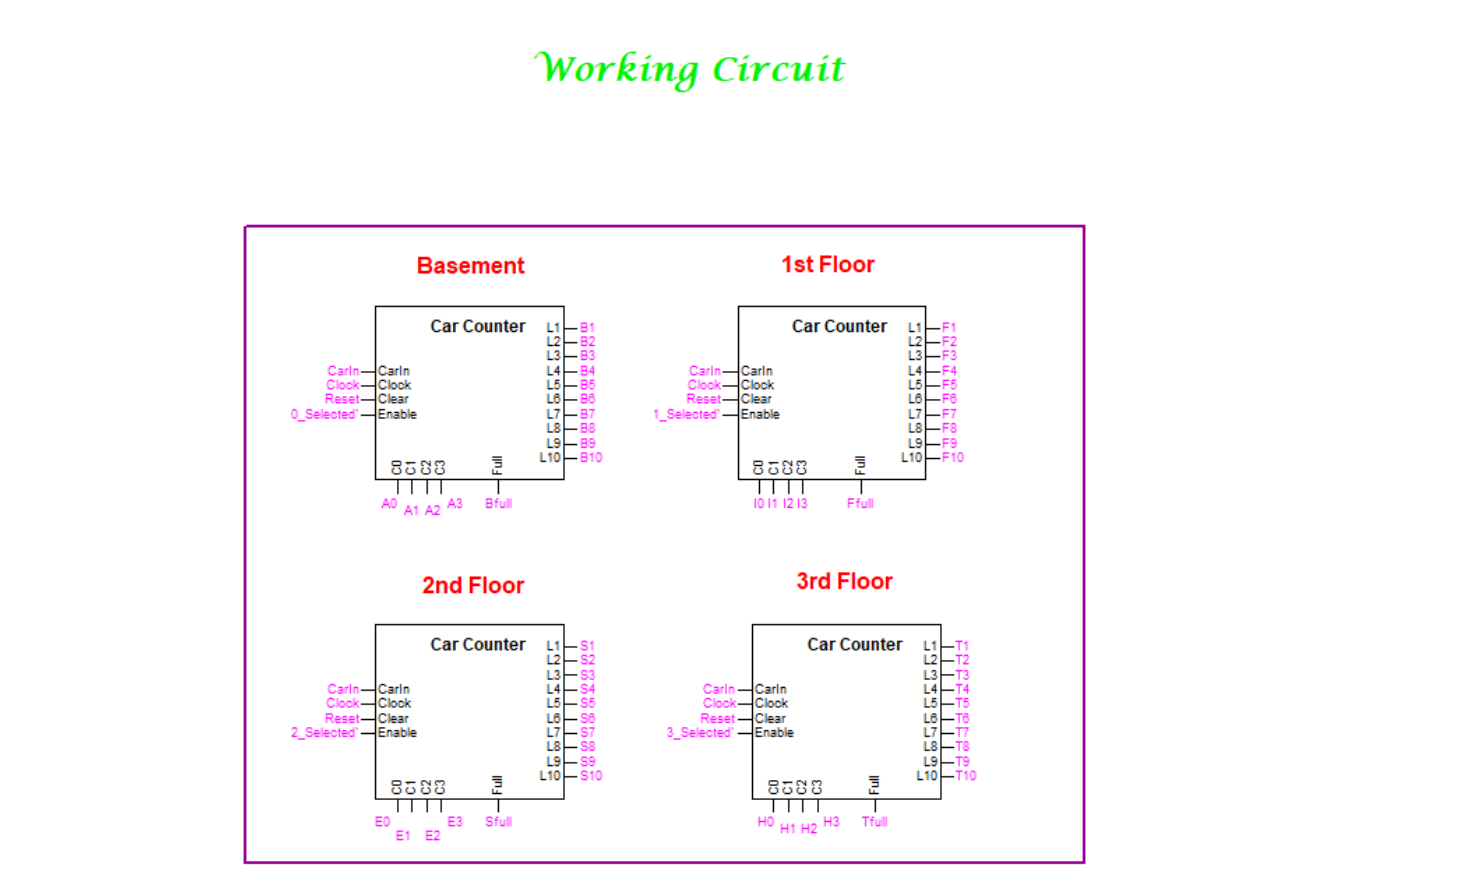 Working Circuit